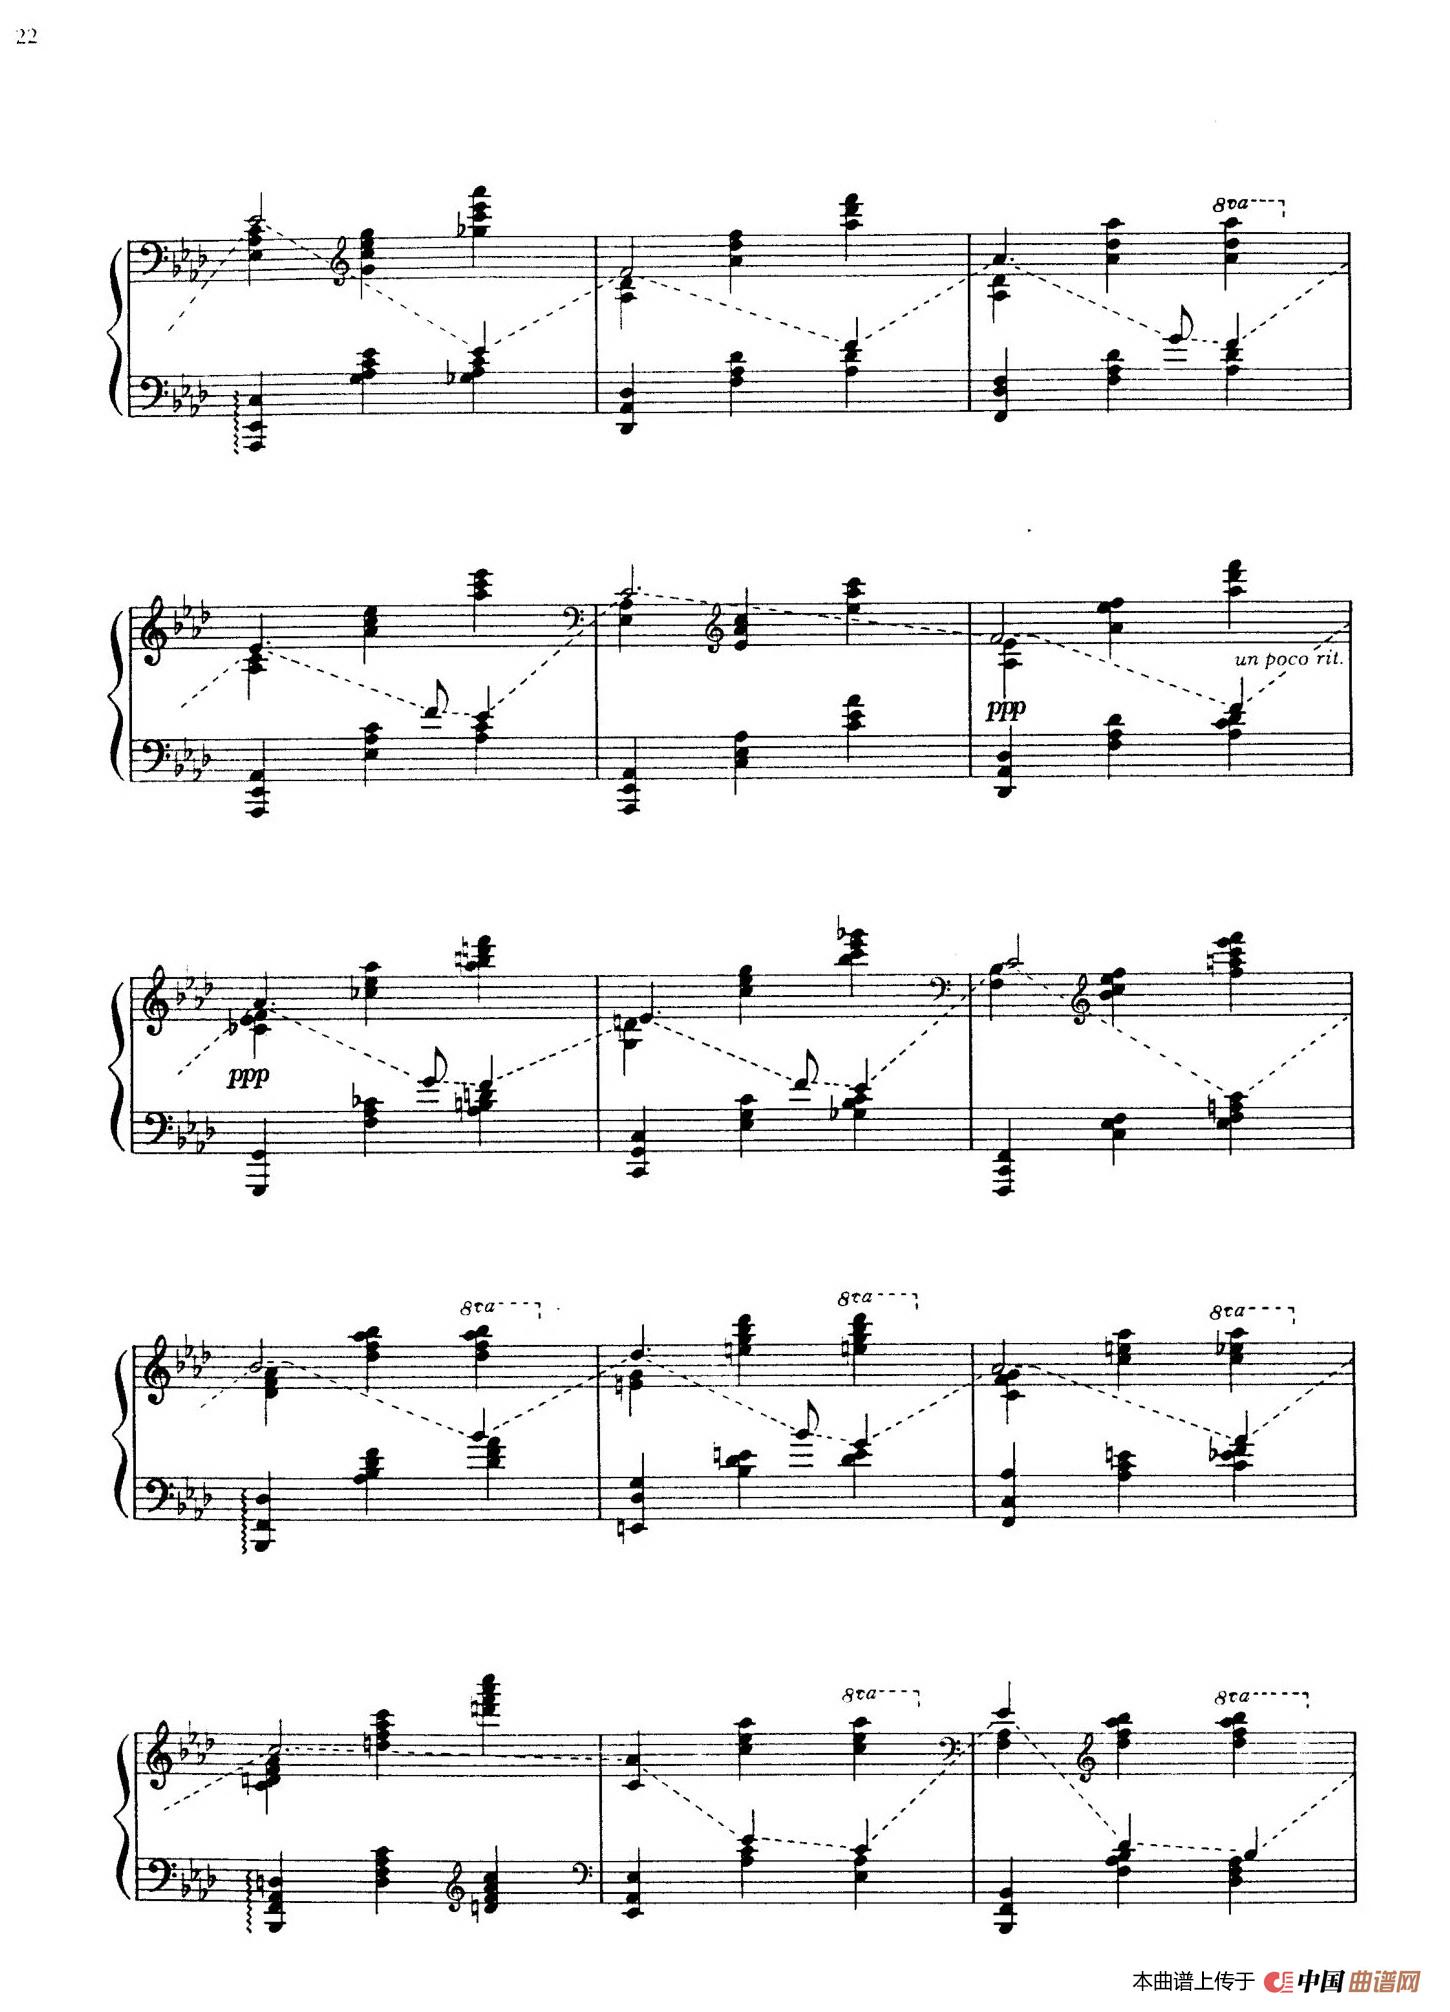 《Souvenir de Noel》钢琴曲谱图分享